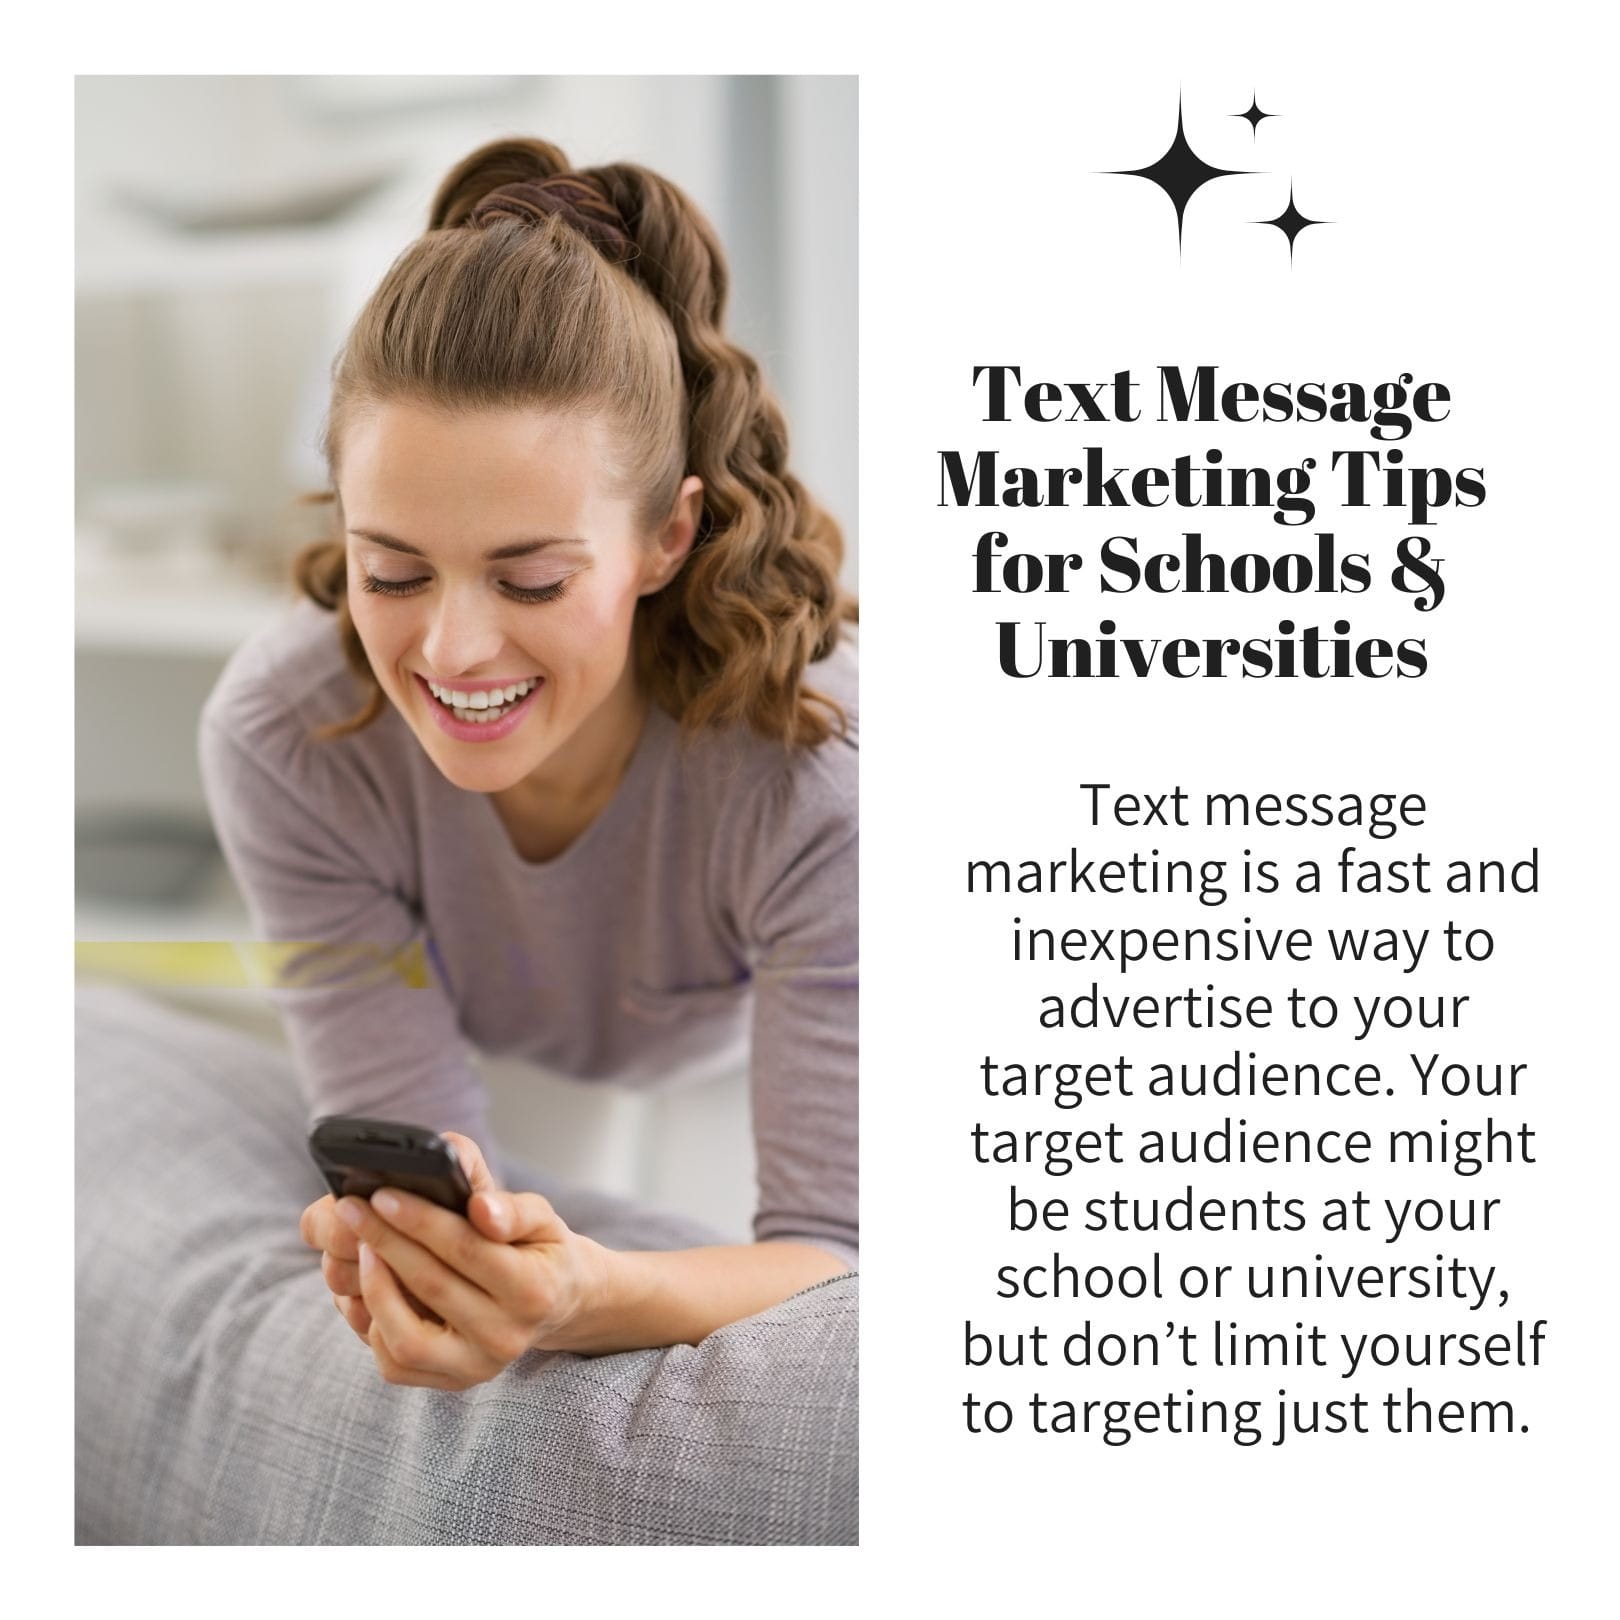 Text Message Marketing Tips for Schools & Universities (1).jpg